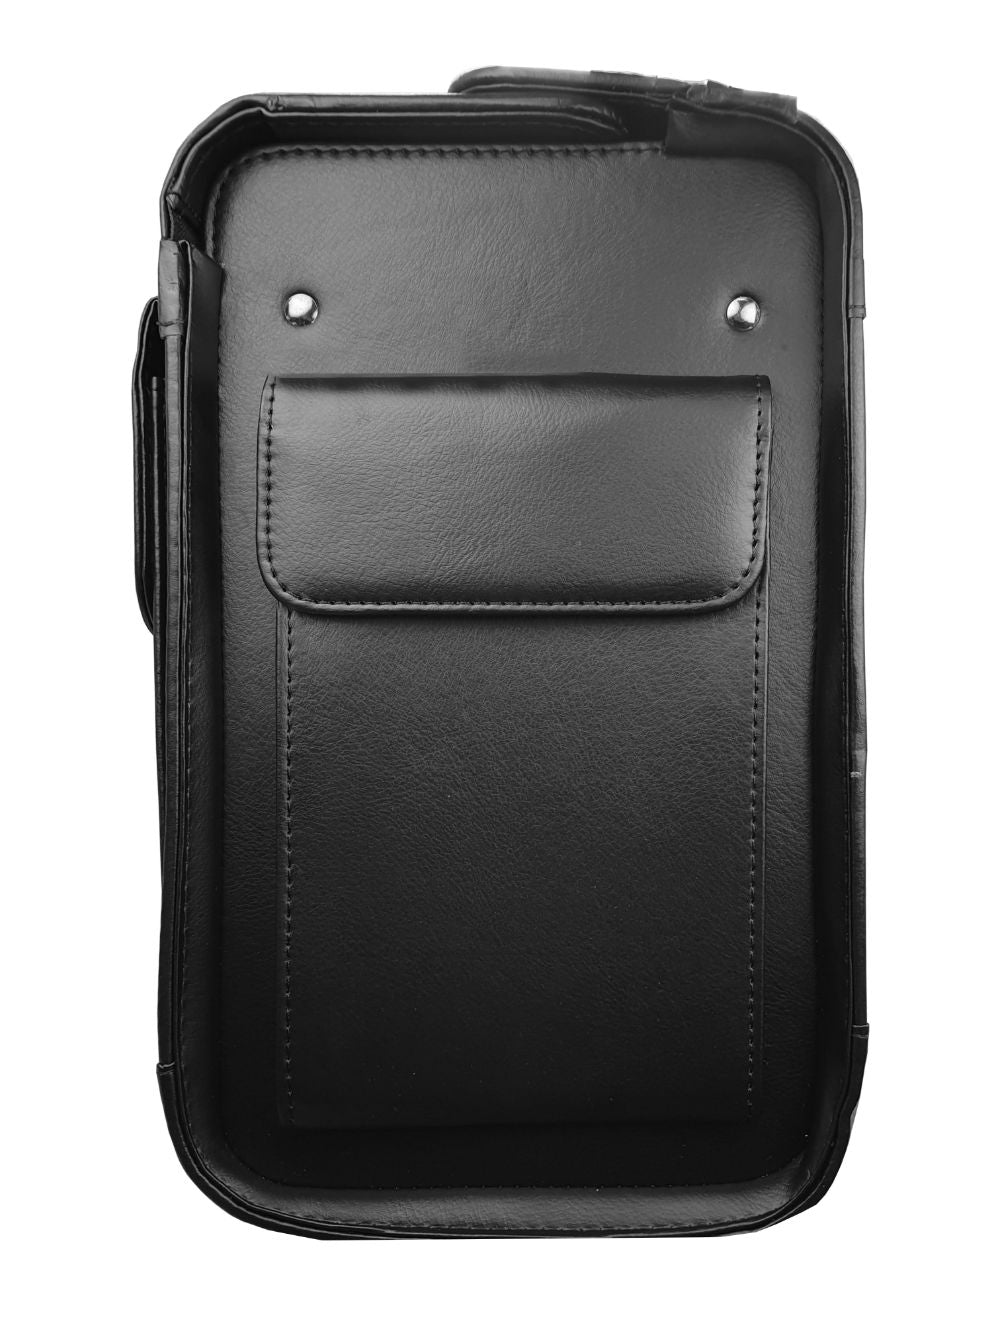 Roamlite Pilots Case Black FU Leather RL9142  end